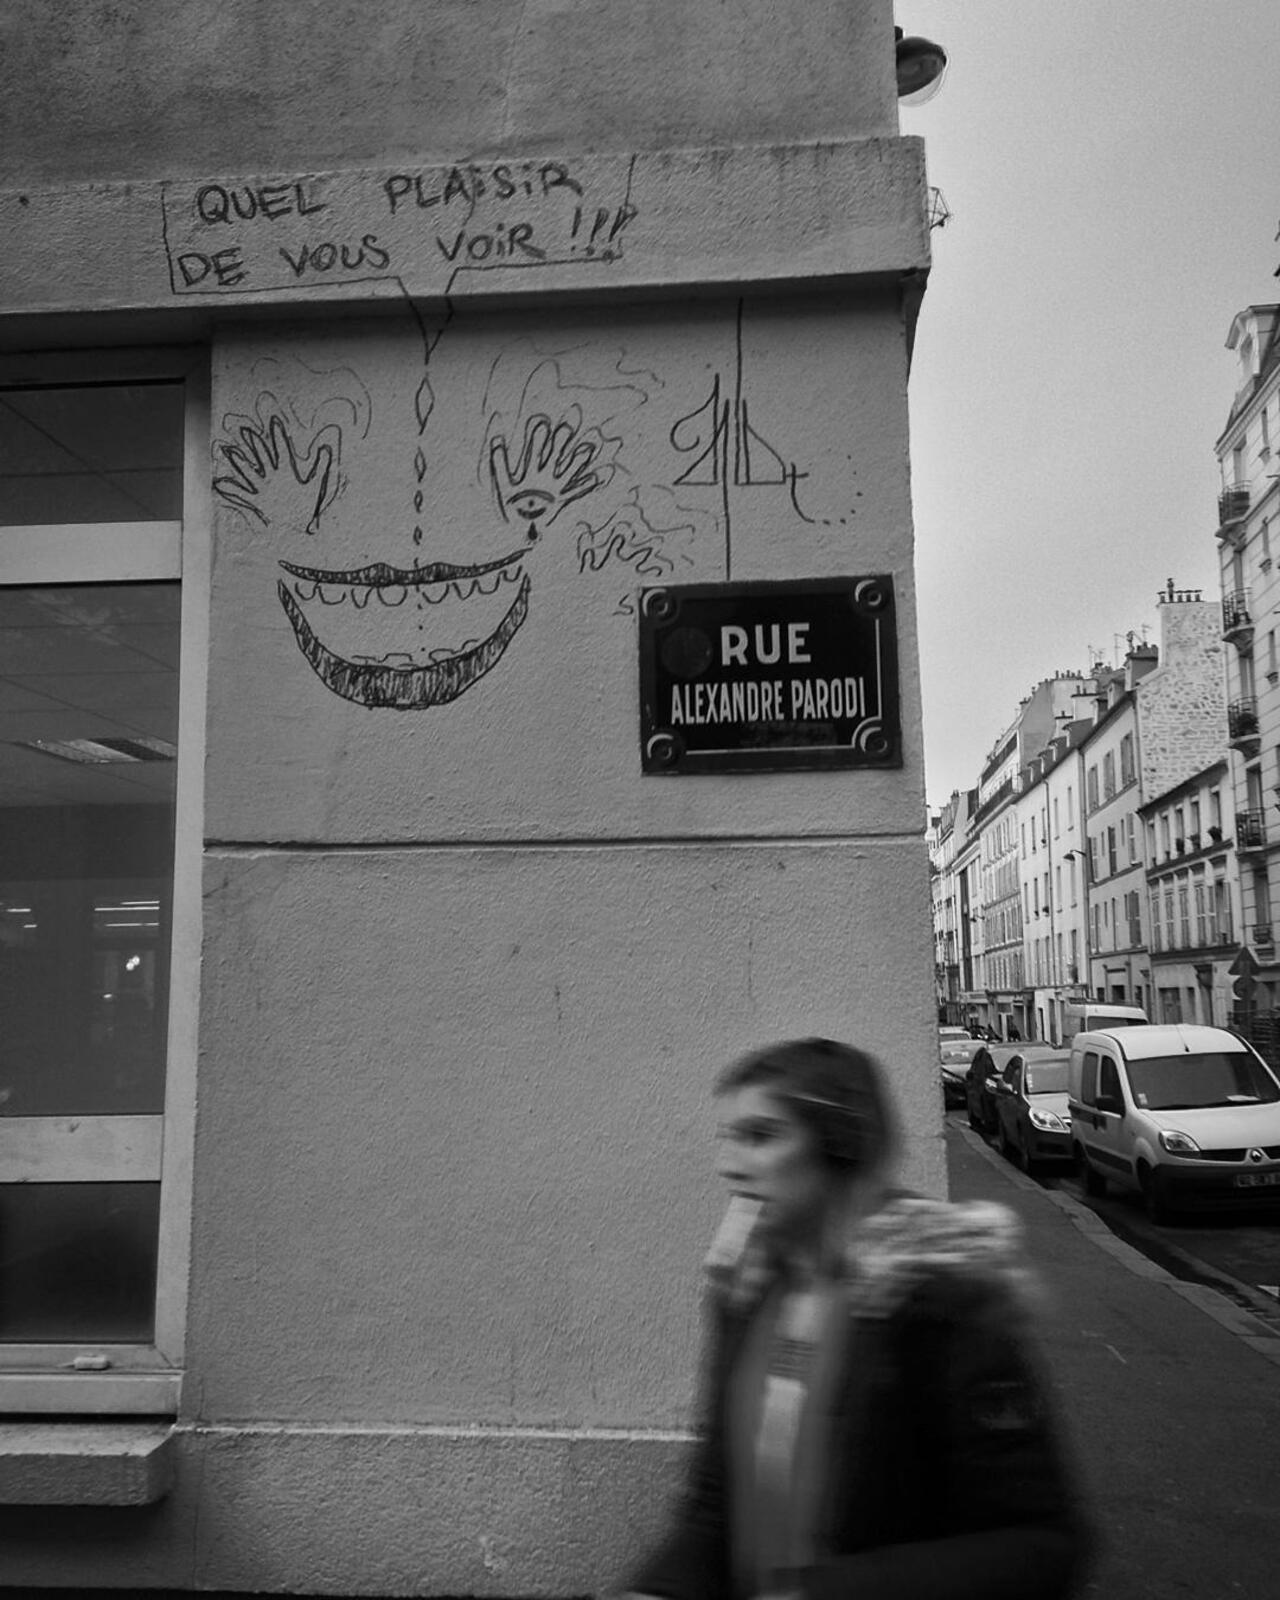 #Paris #graffiti photo by @joecoolpix http://ift.tt/1RWlxU6 #StreetArt https://t.co/fwpQk56mLf